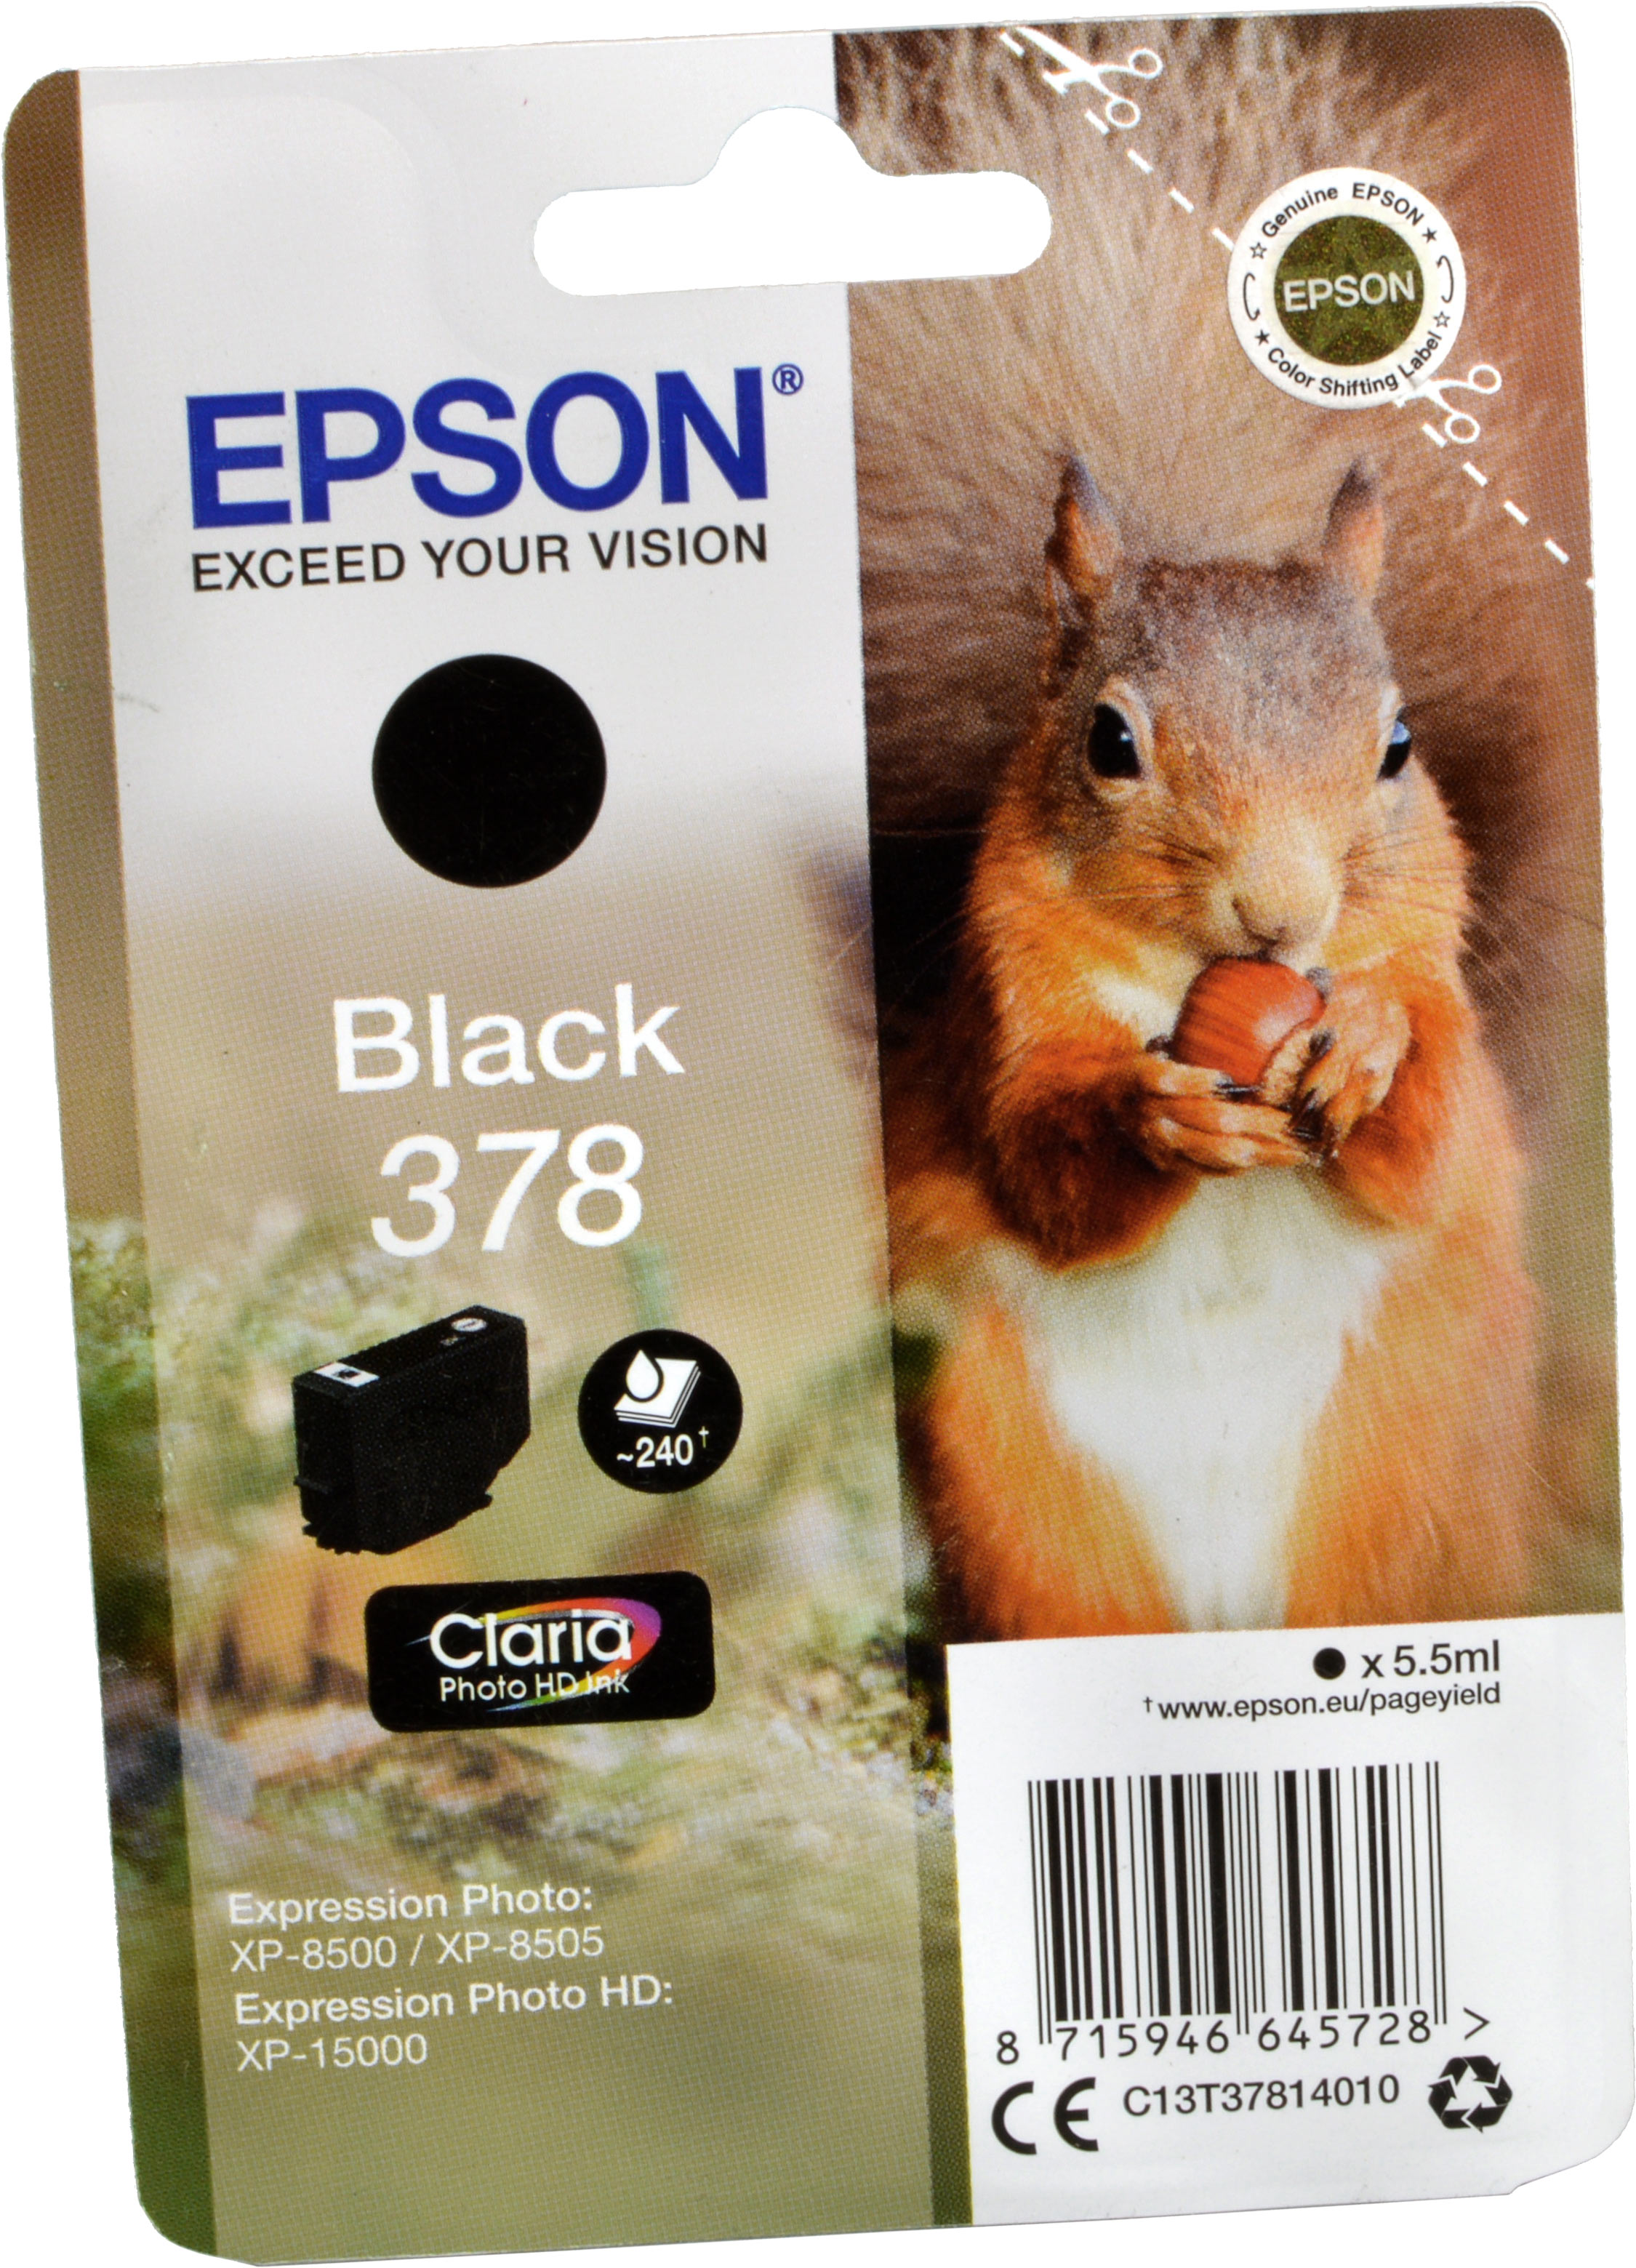 Epson Tinte C13T37814010  378  schwarz